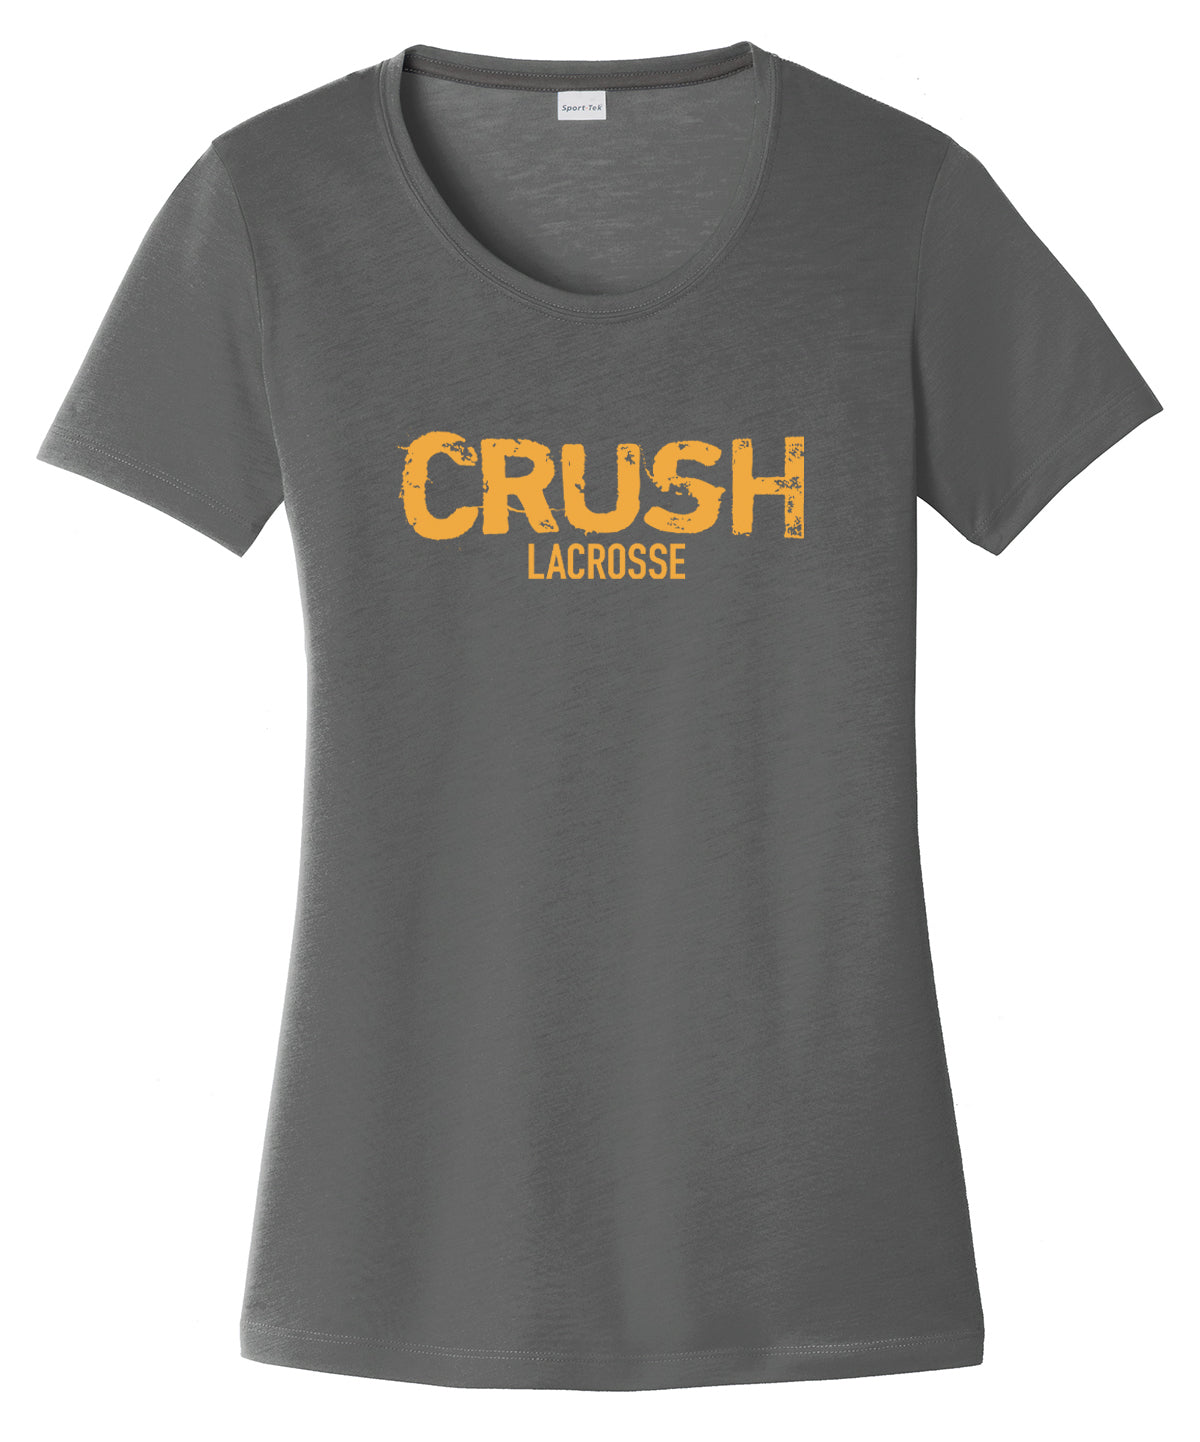 Crush Lacrosse Women's Smoke Grey CottonTouch Performance T-Shirt